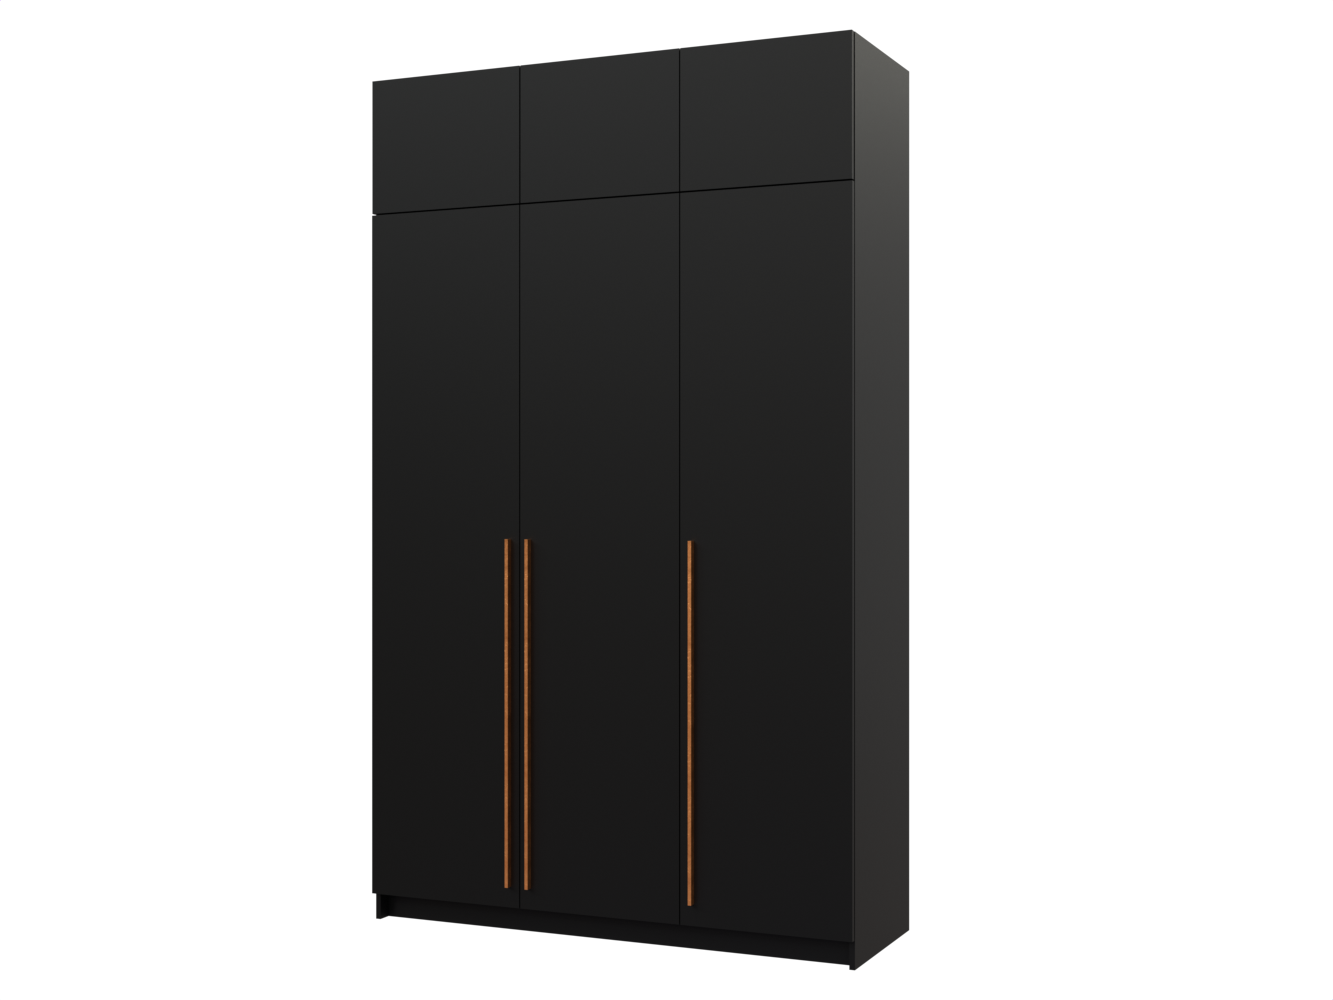 Распашной шкаф Пакс Фардал 54 black ИКЕА (IKEA) изображение товара